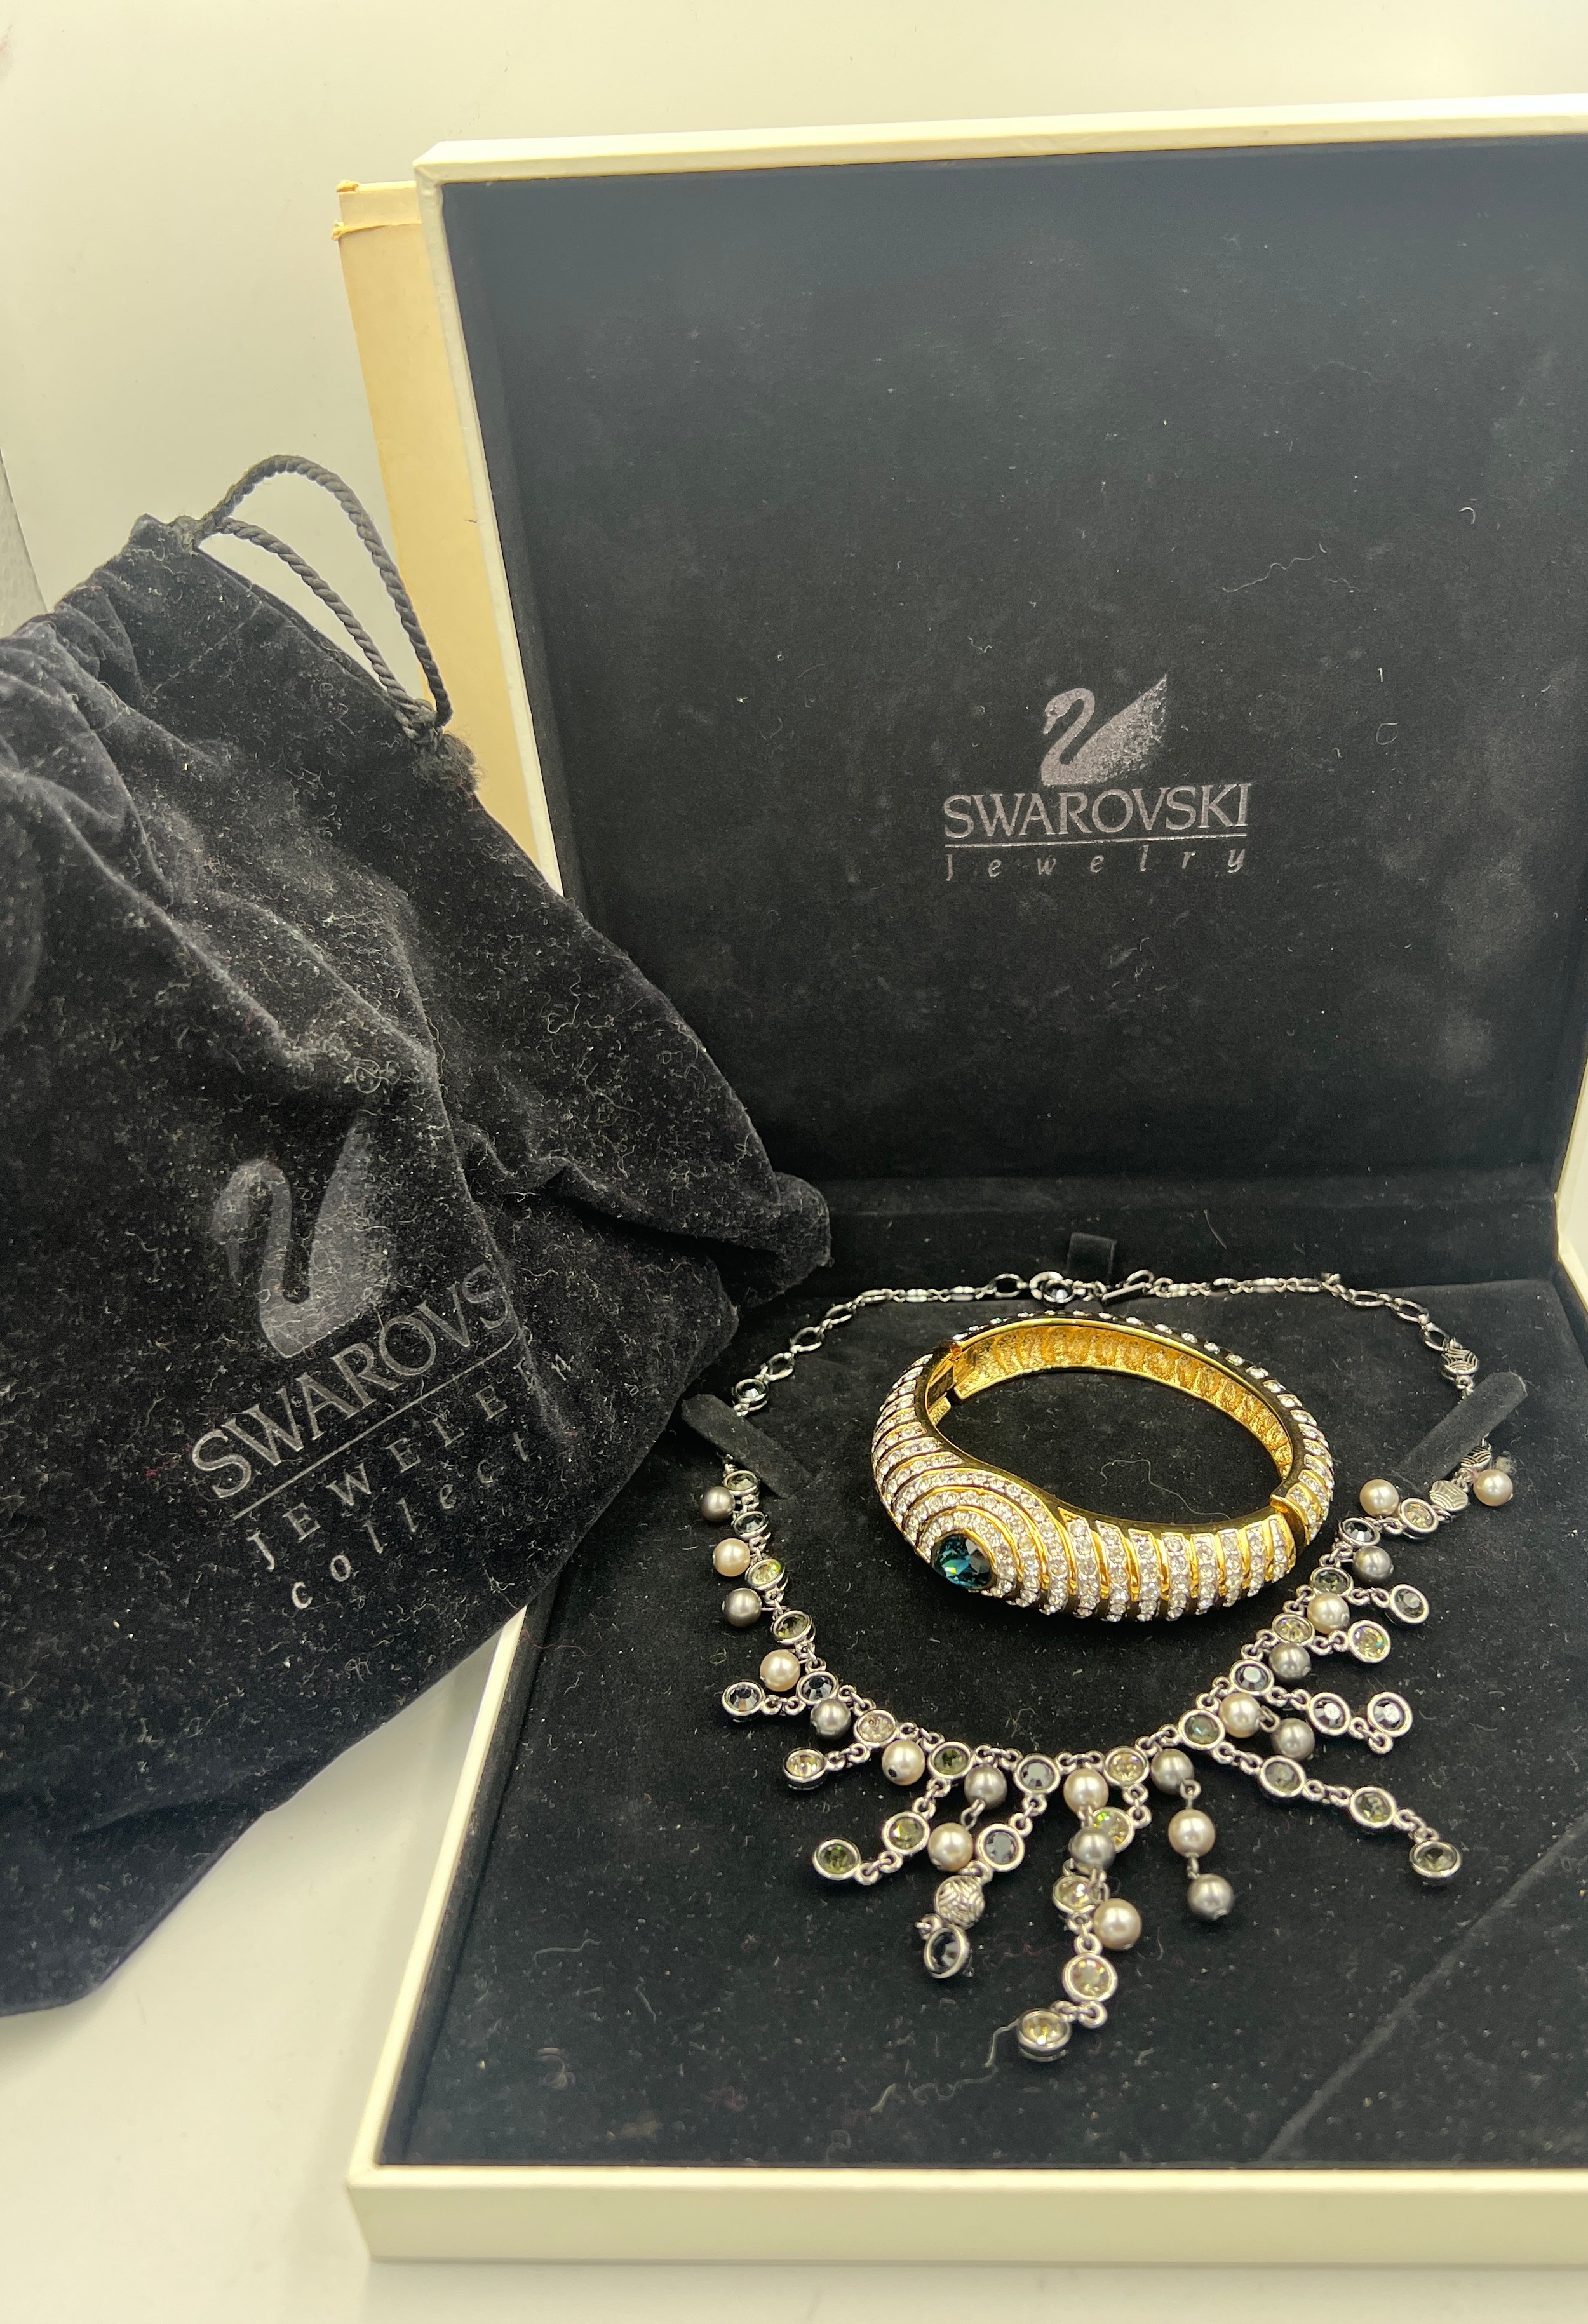 Vintage Swarovski necklace in original case and box together with a Swarovski hinged bangle in